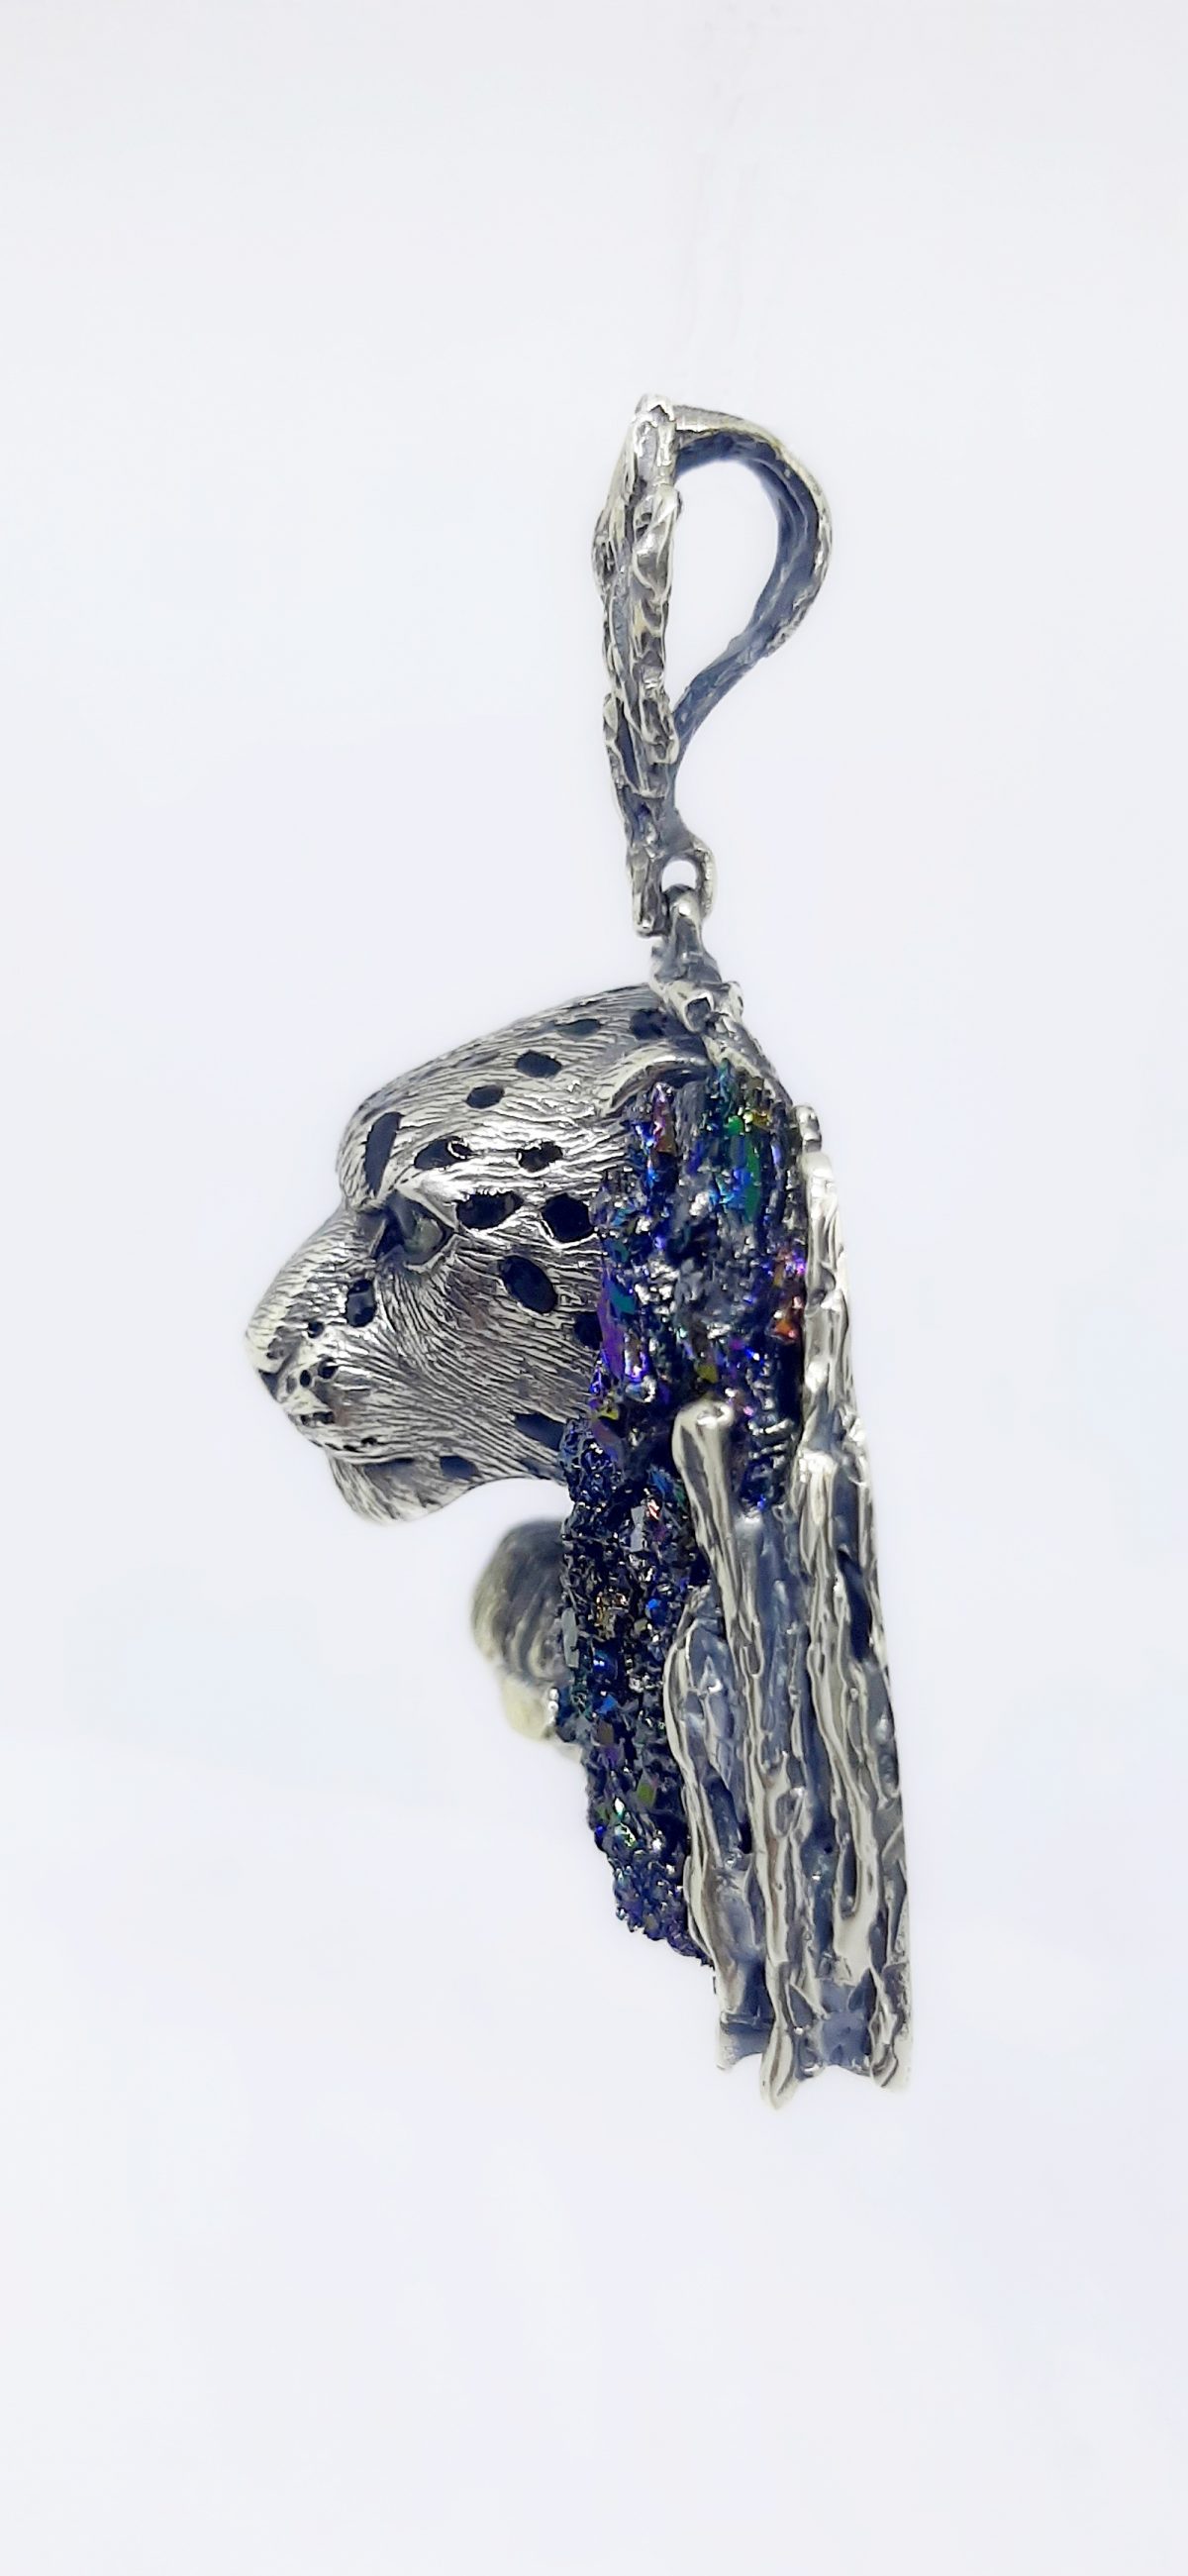 Silver Leopard Pendant with Druzy Rainbow Carborundum